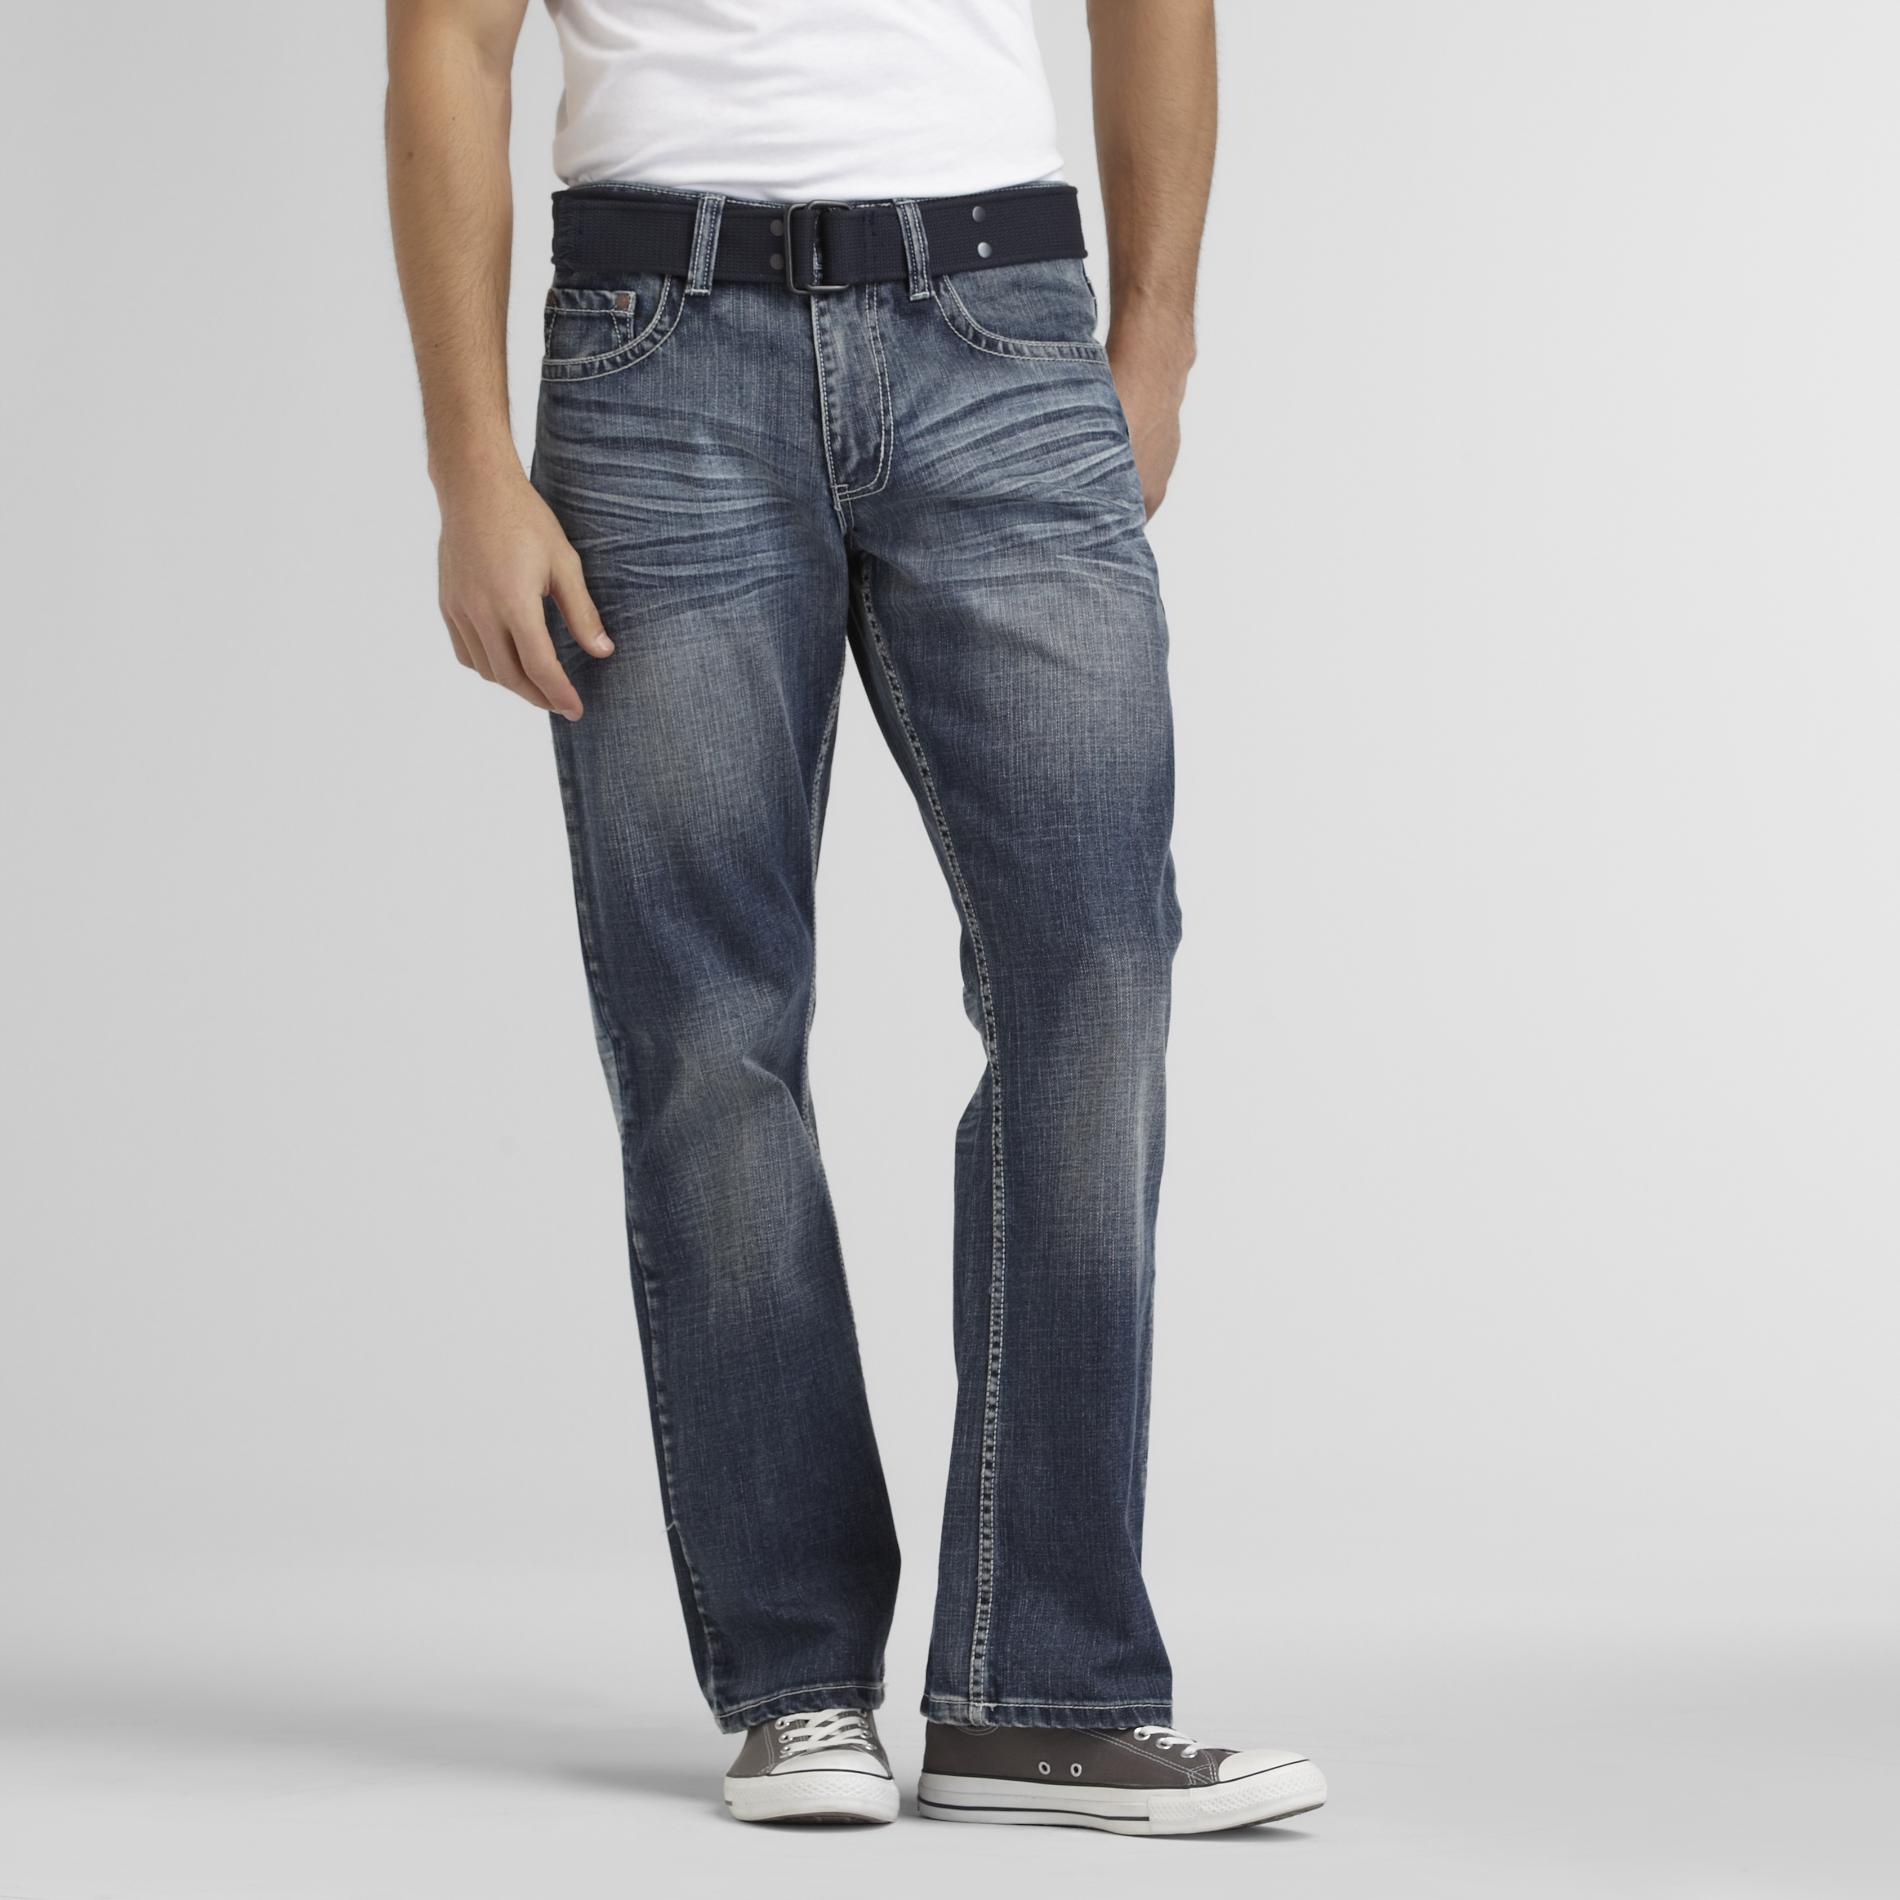 Men's Bootcut Jeans & Belt